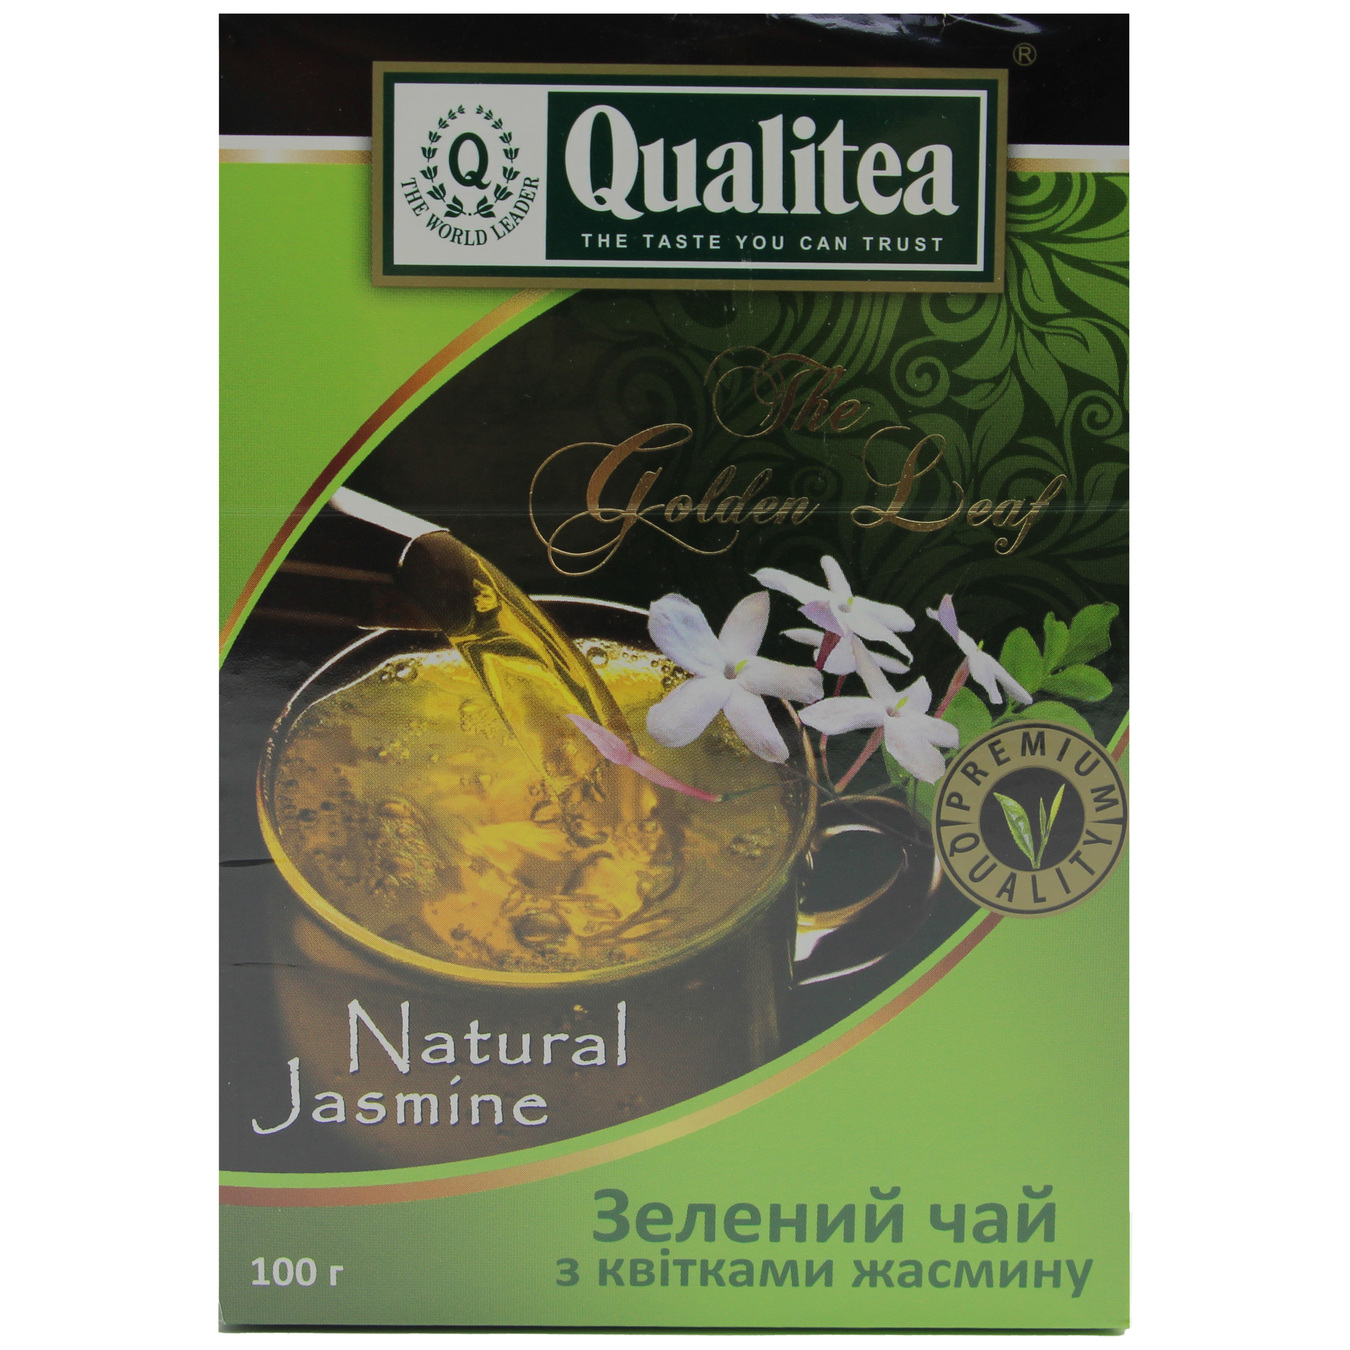 Qualitea with Jasmine Flowers Green Tea 100g